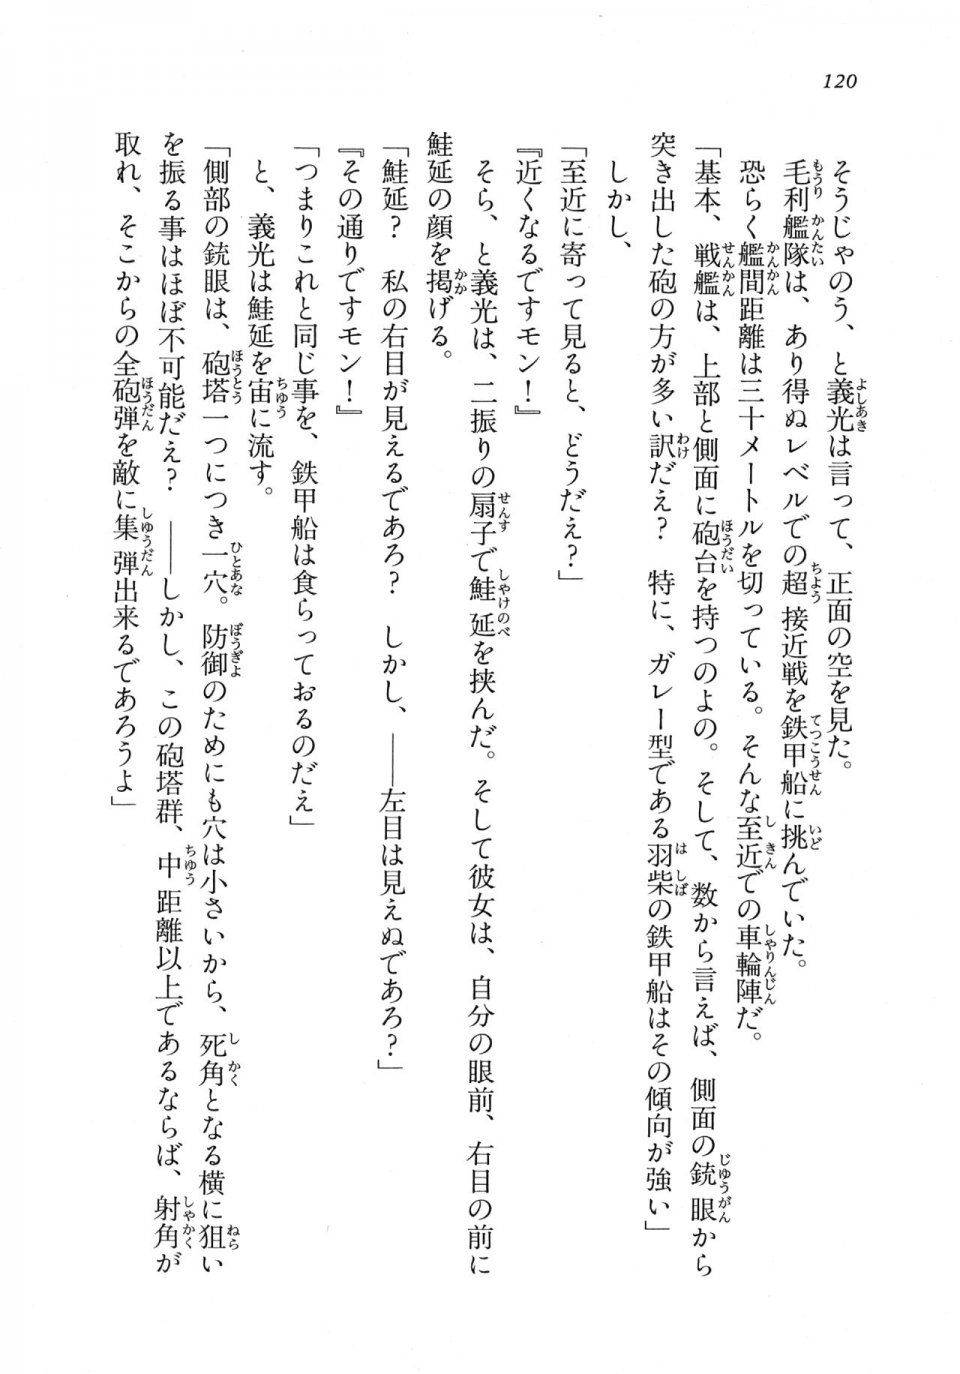 Kyoukai Senjou no Horizon LN Vol 18(7C) Part 1 - Photo #120